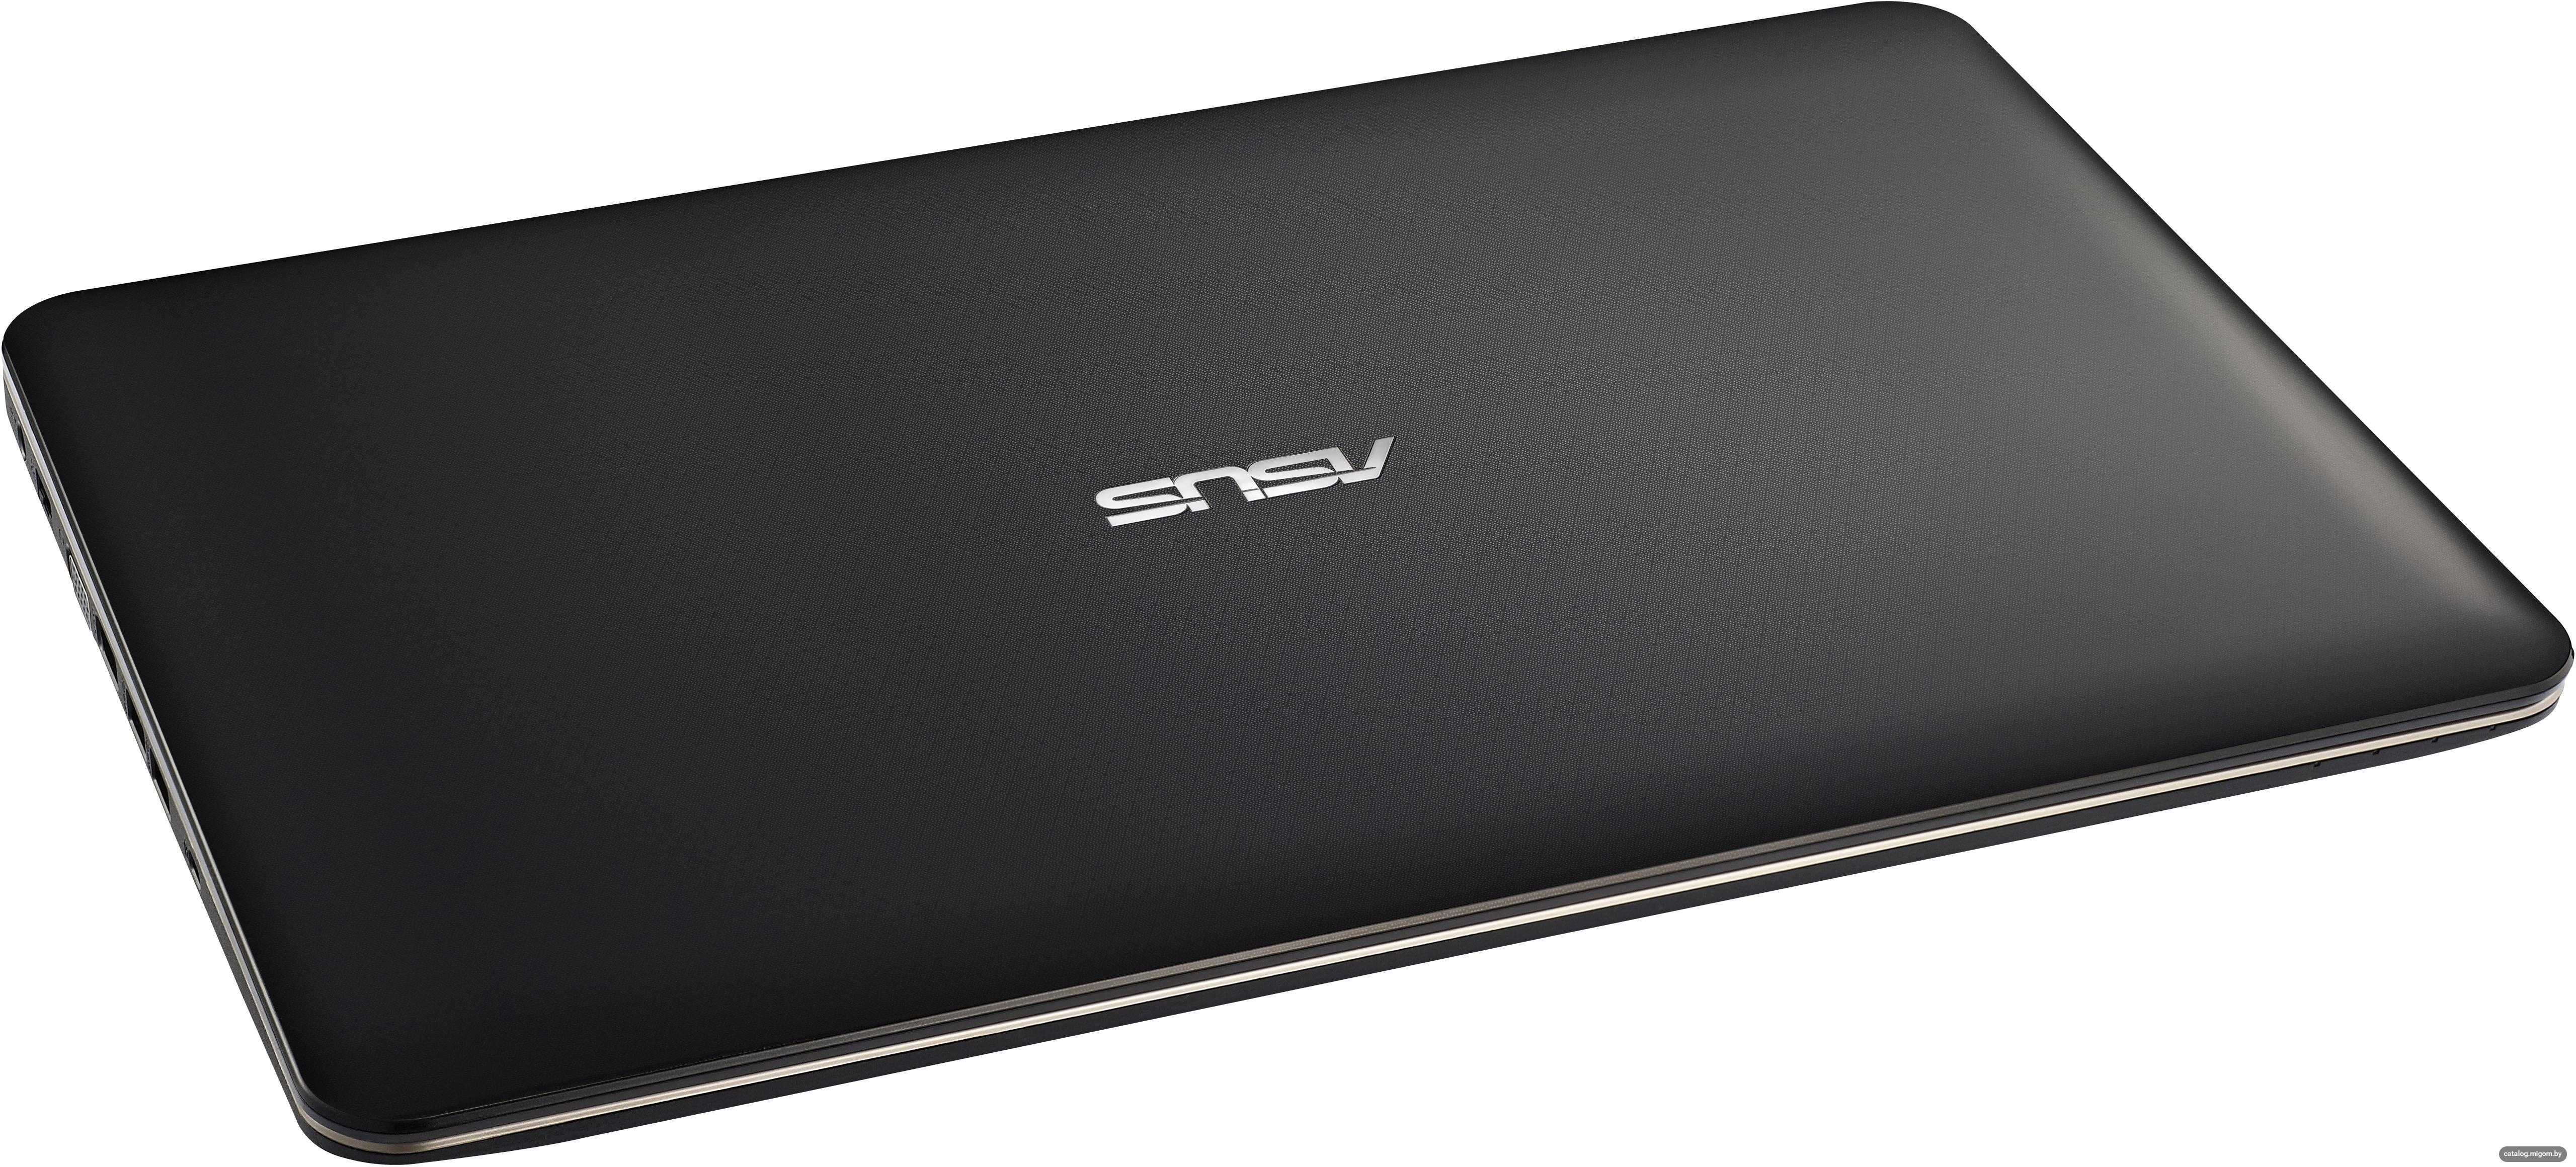 Asus x555lb dark brown (x555lb-xo479d) ᐈ нужно купить  ноутбук?